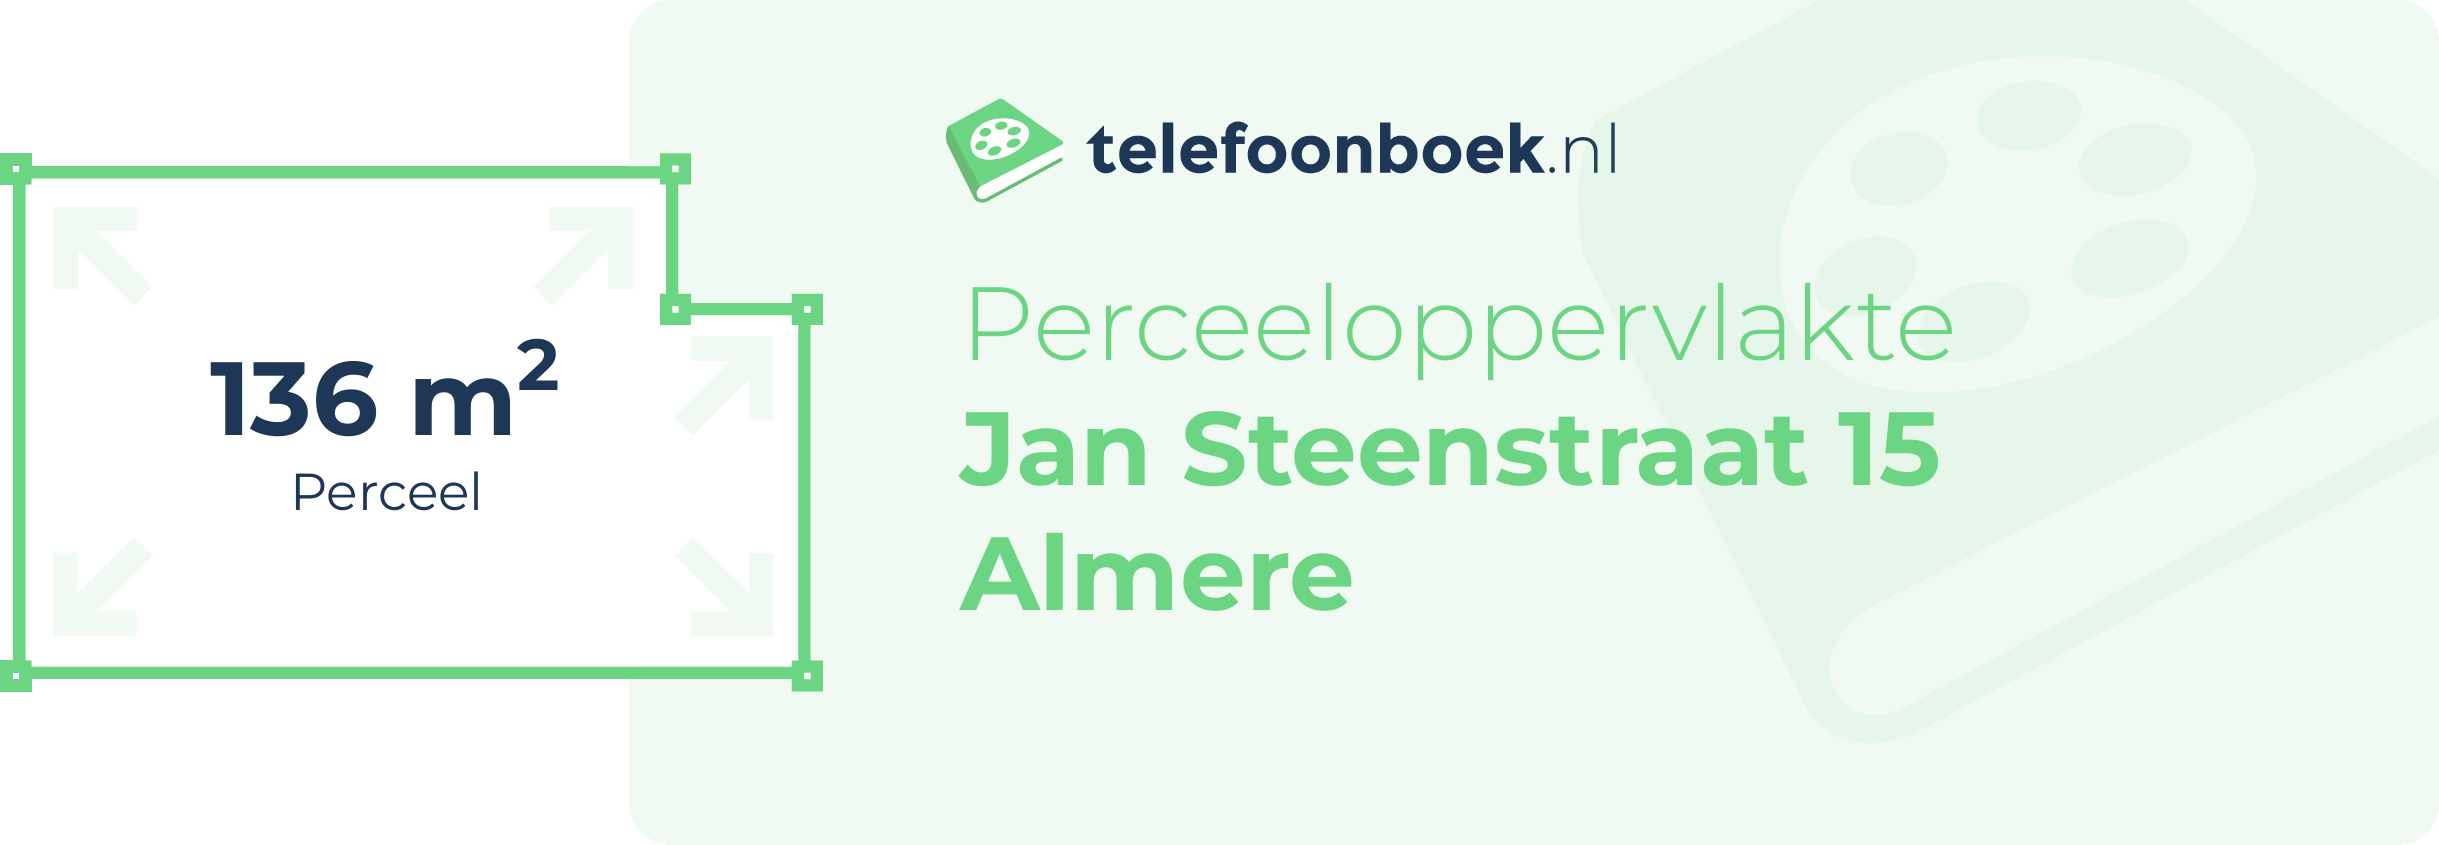 Perceeloppervlakte Jan Steenstraat 15 Almere